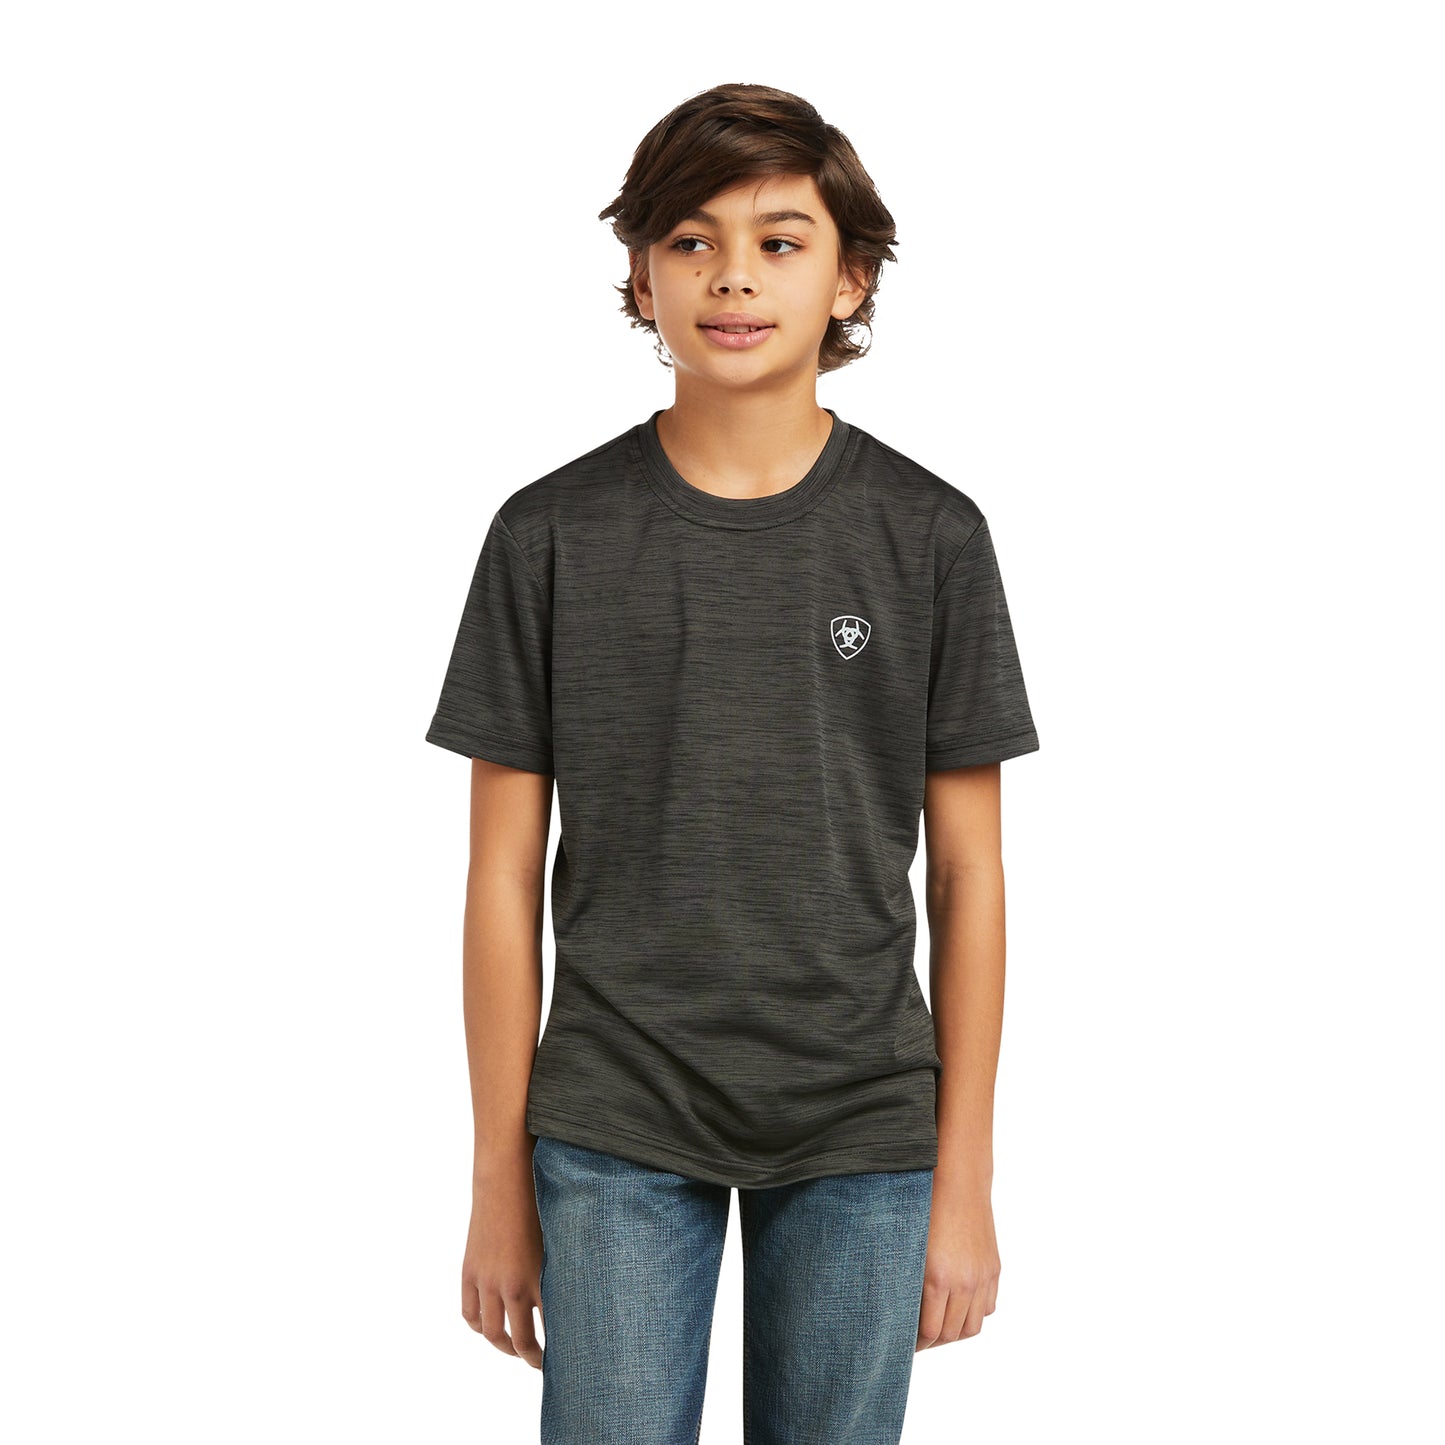 Ariat Boy's Short Sleeve Charcoal Charger Vertical Flag T-Shirt 10039584